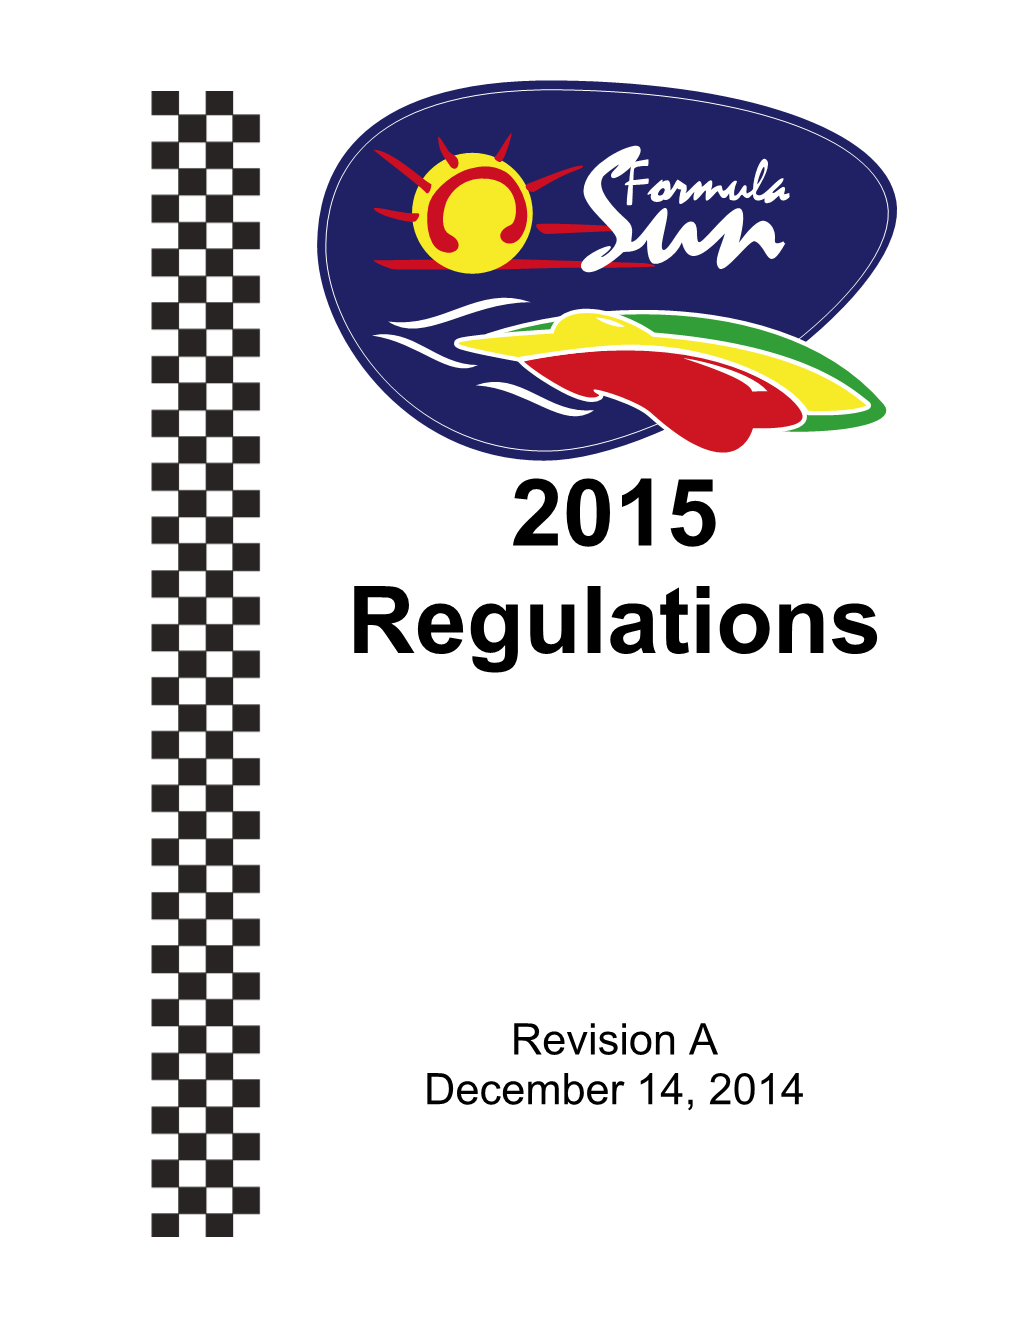 FSGP 2015 Regulations